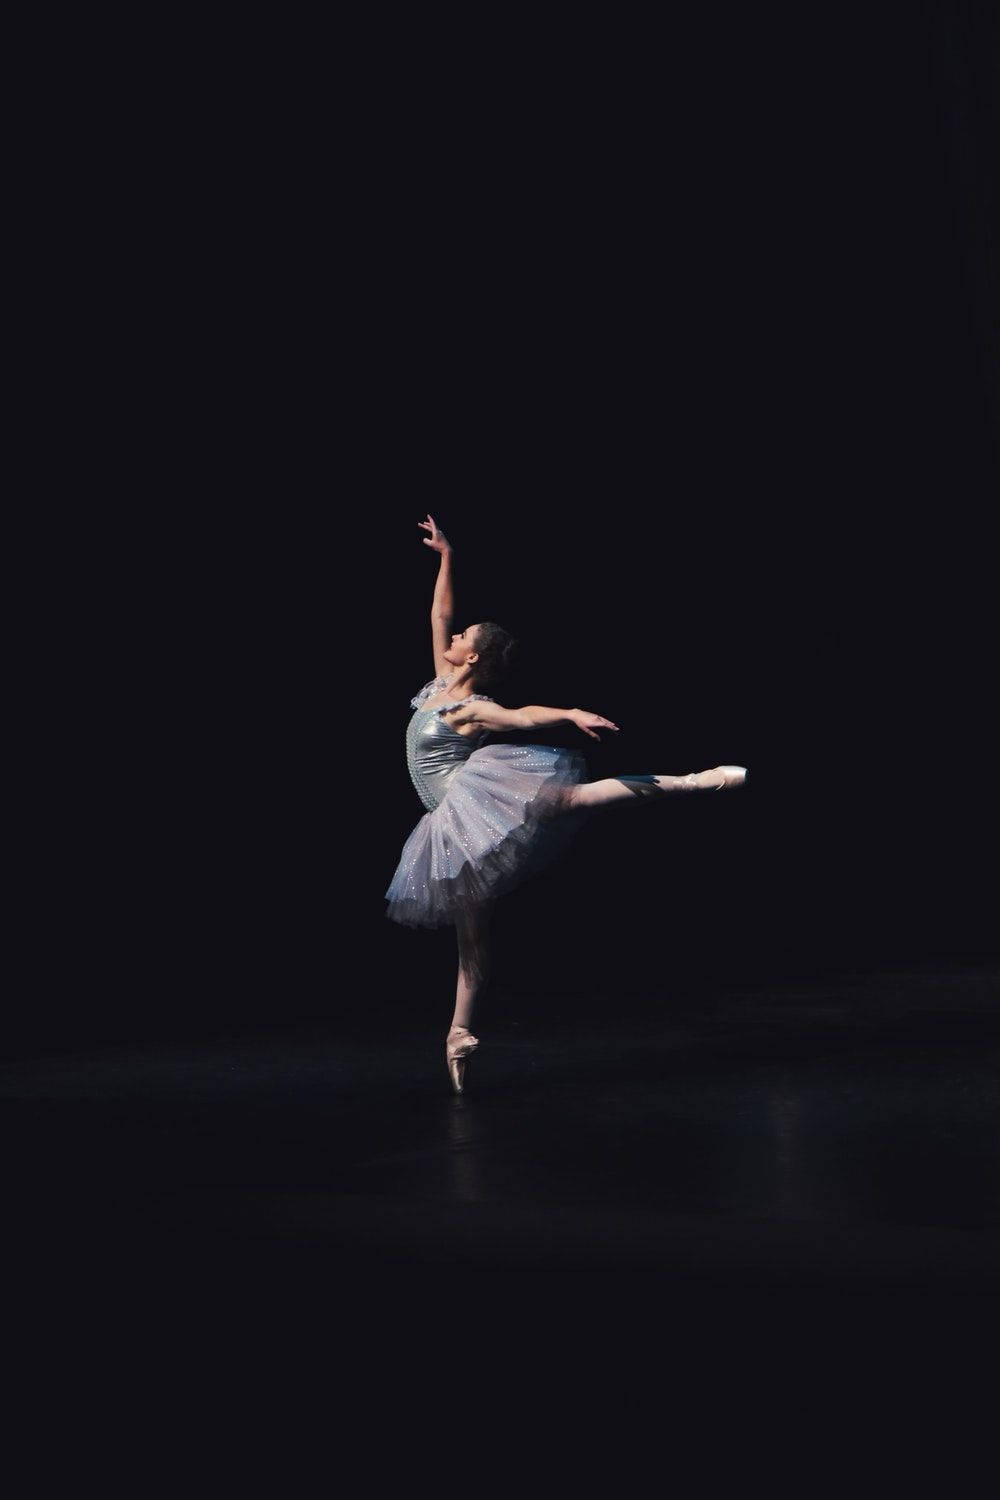 Breathtaking Ballet Dance Performance Wallpaper